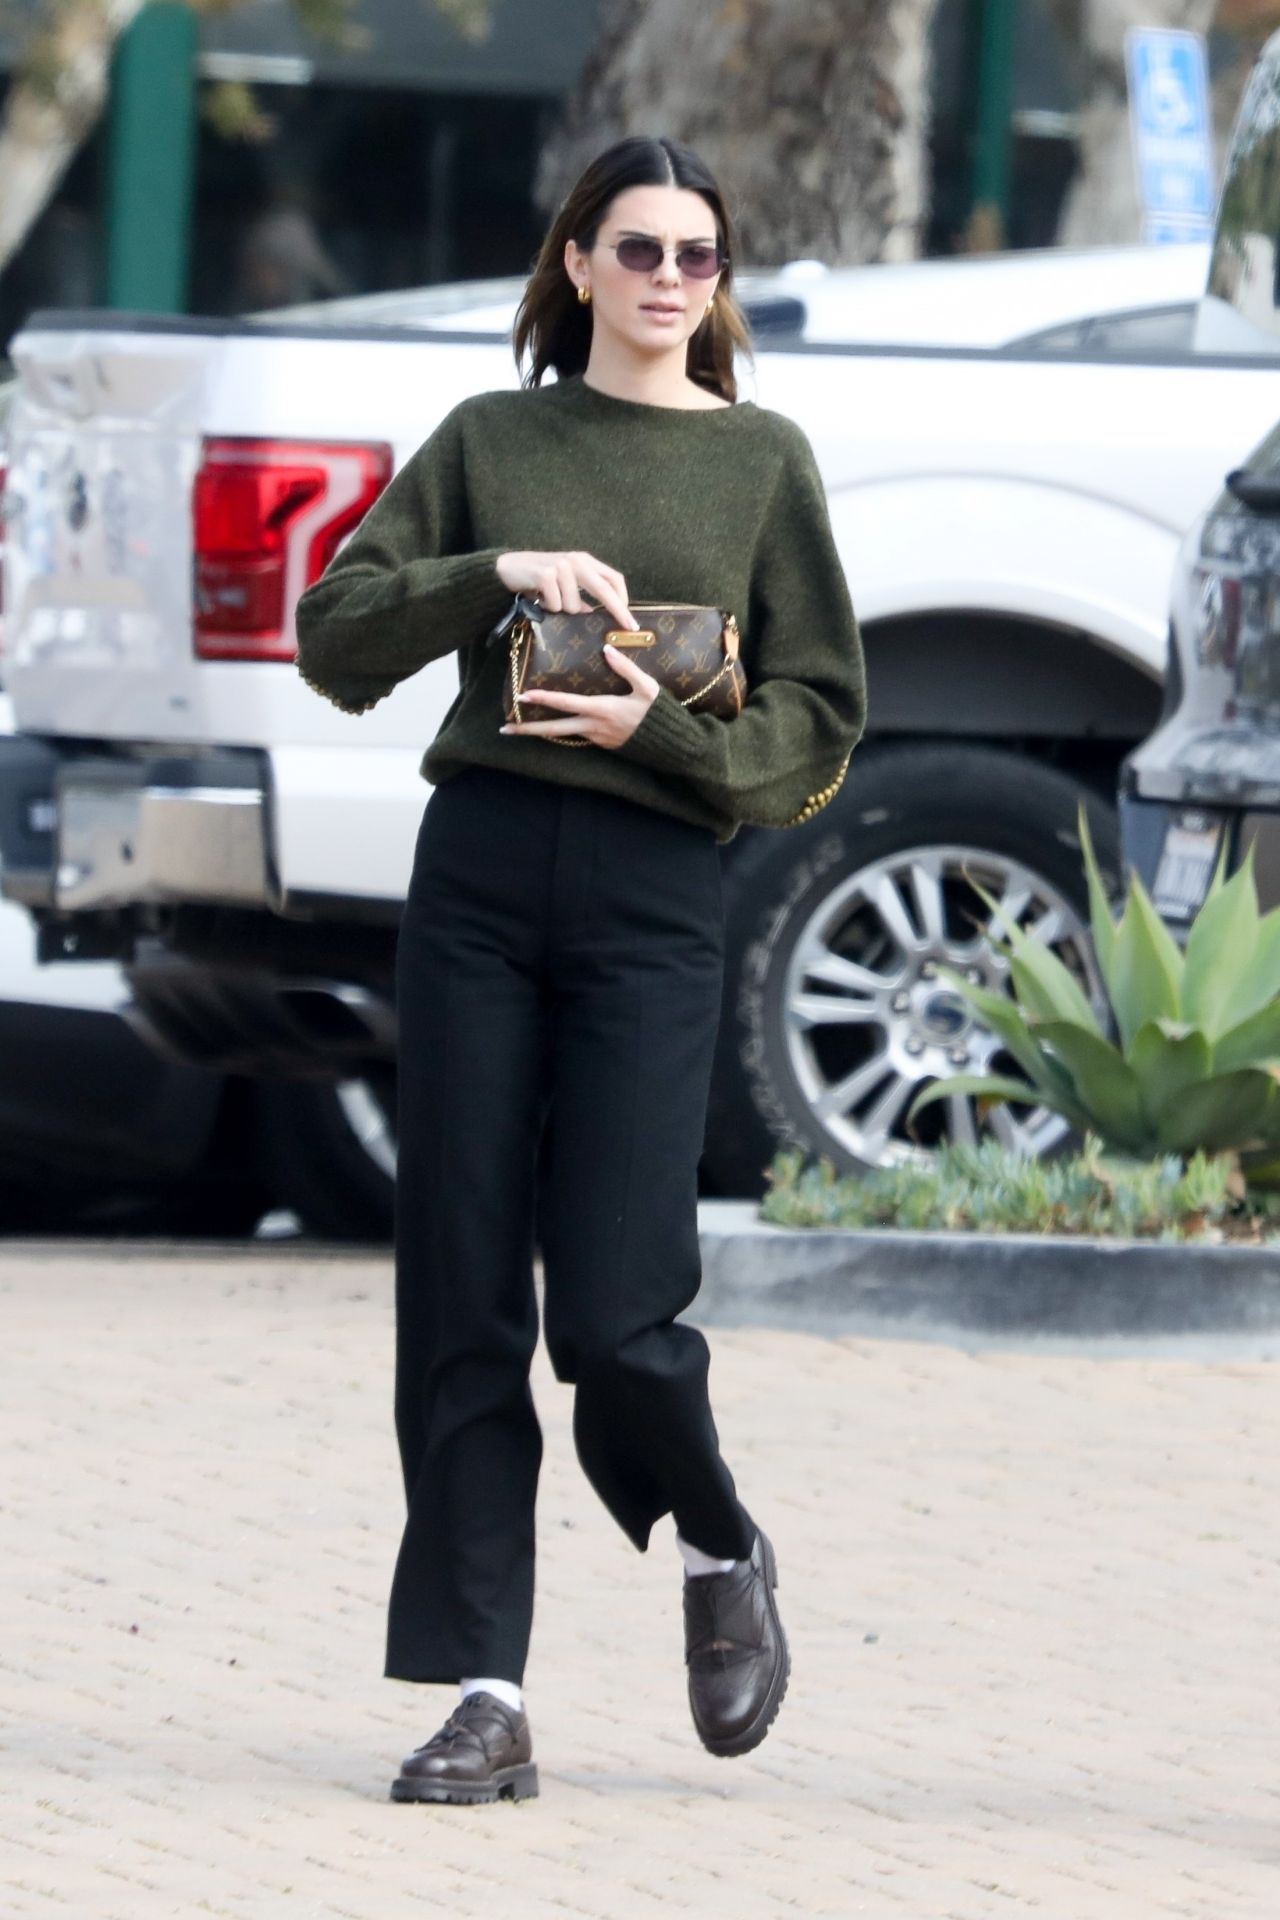 Kendall Jenner Malibu October 12, 2020 – Star Style